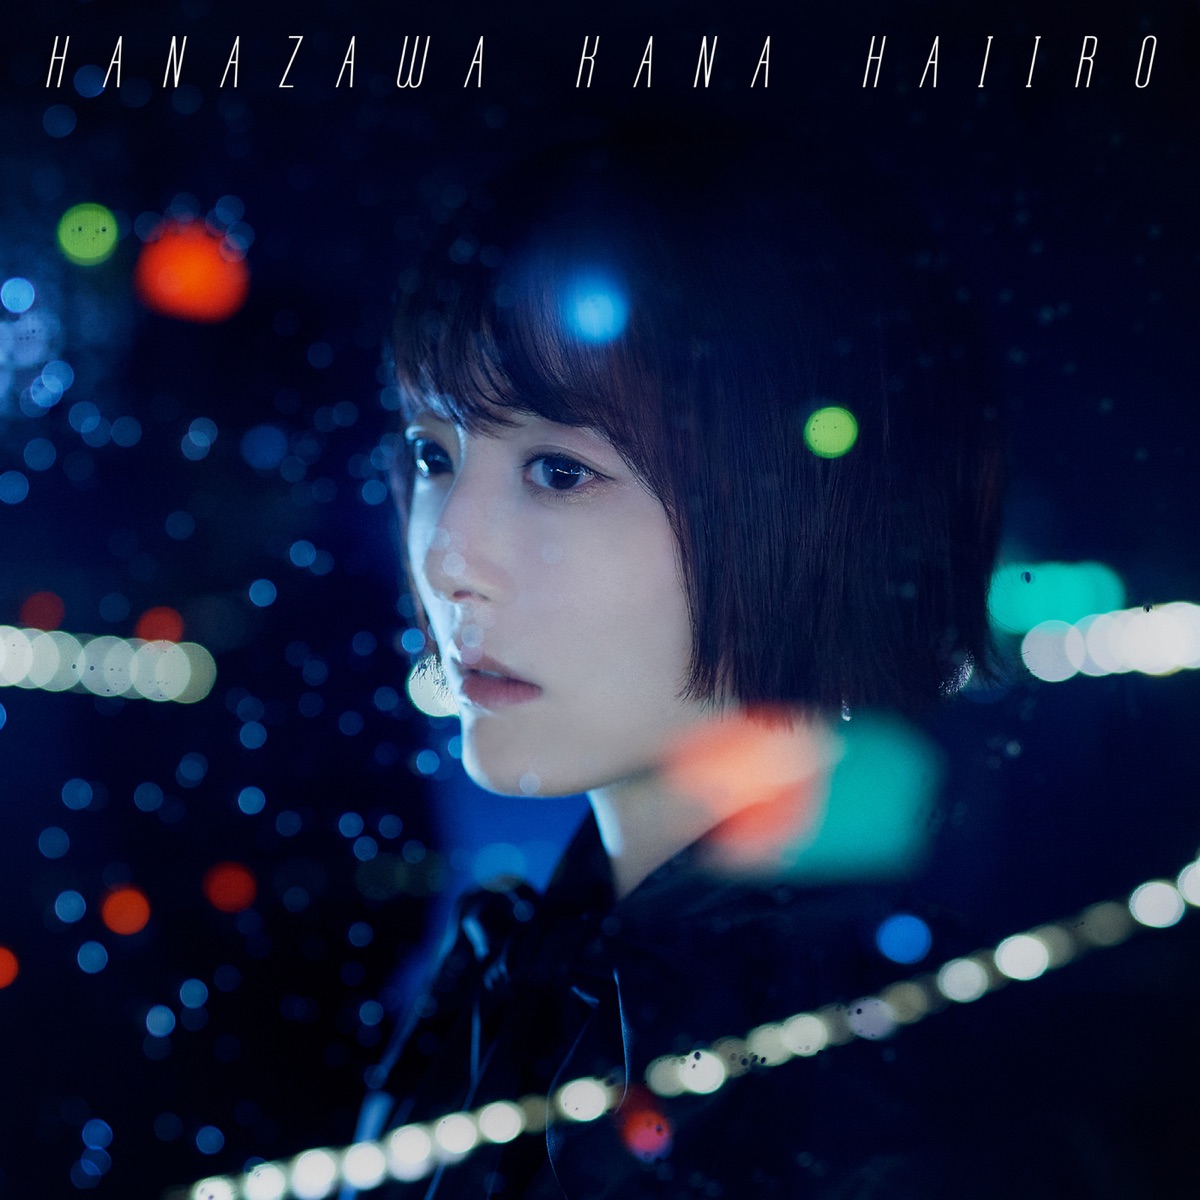 Cover art for『Kana Hanazawa - Haiiro』from the release『Haiiro』